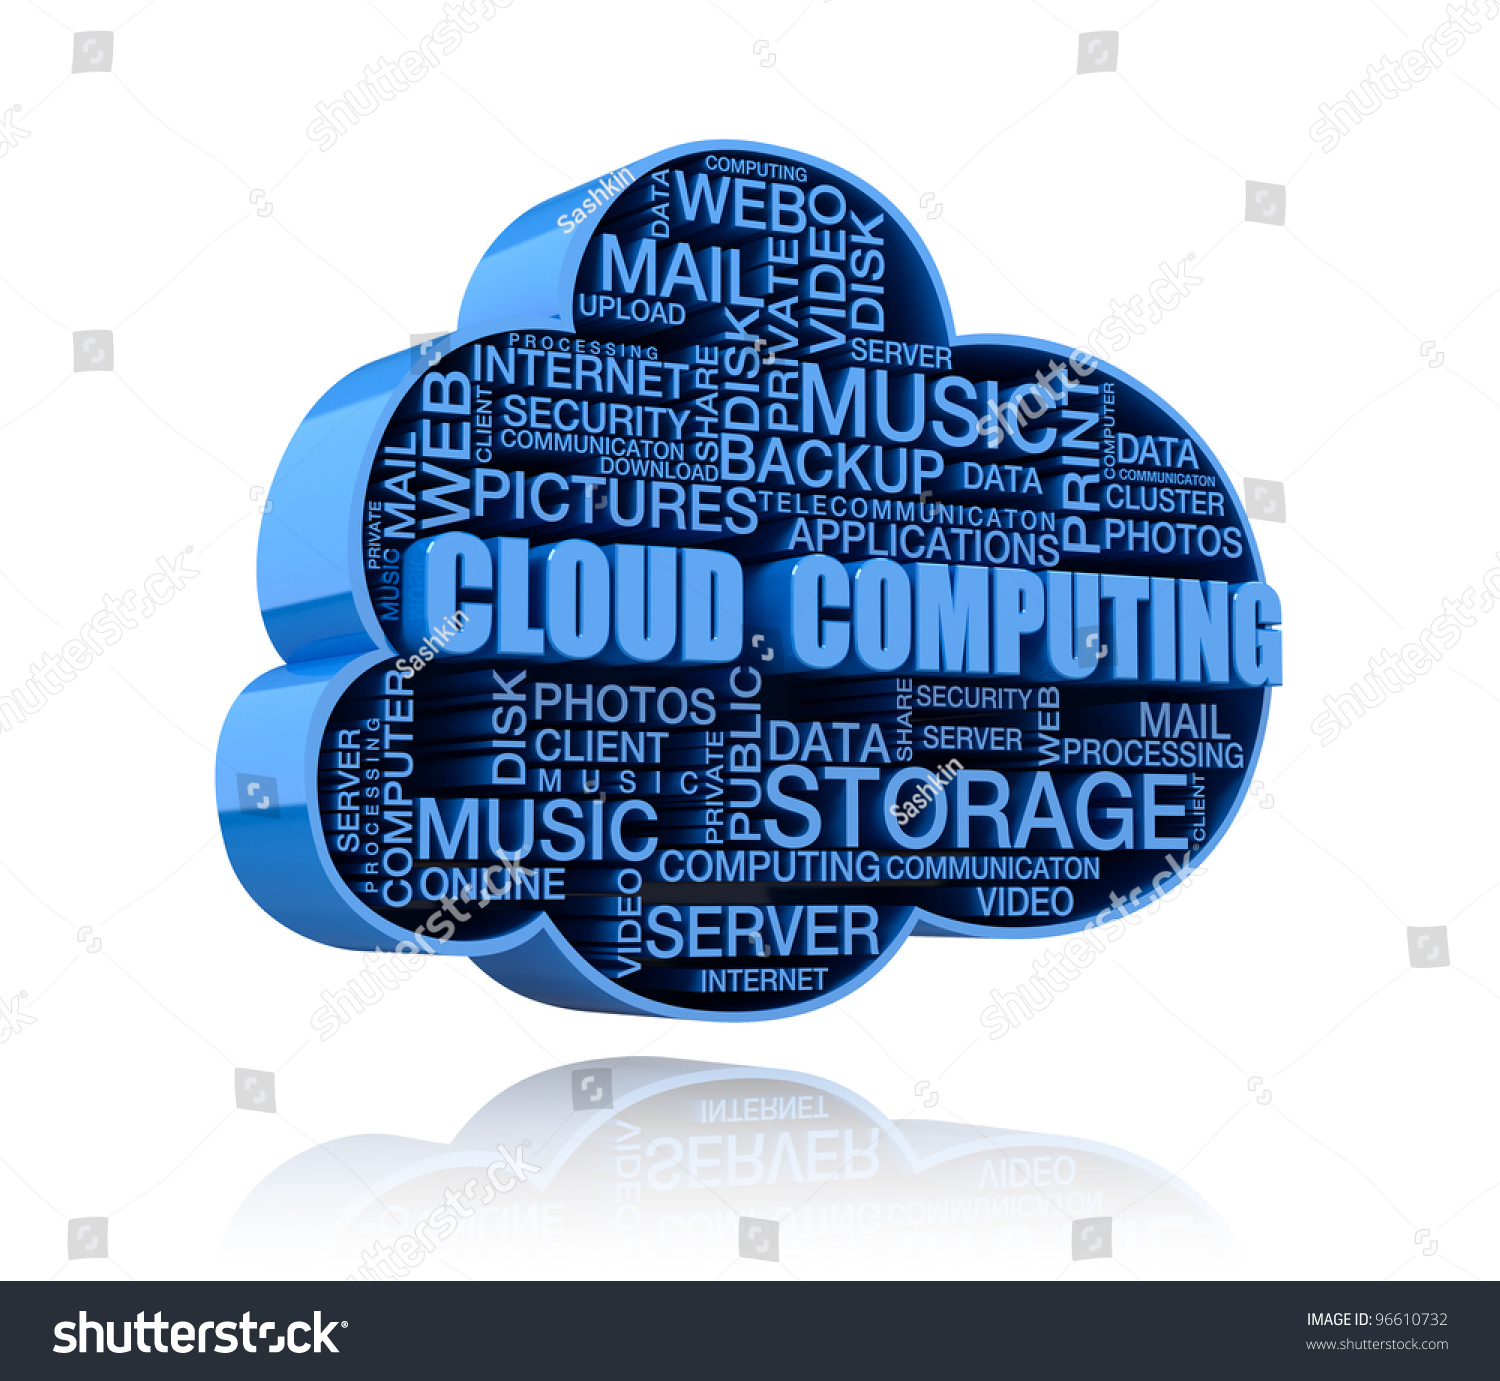 Define Cloud Computing Pdf